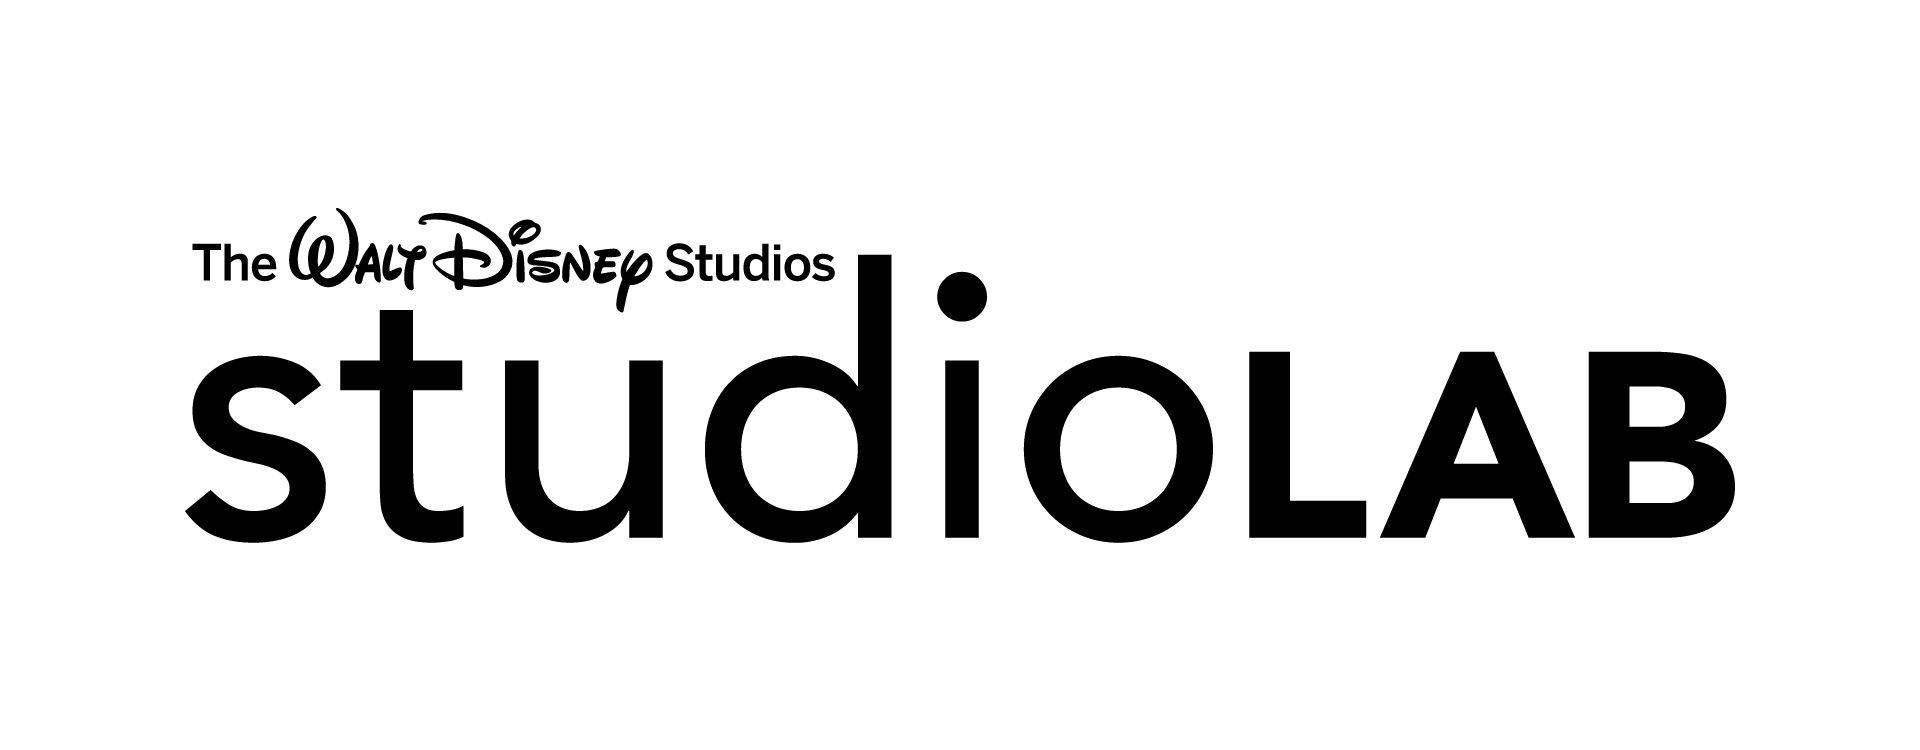 The Walt Disney Studios Logo - The Walt Disney Studios Selects Cisco as an Innovation Partner